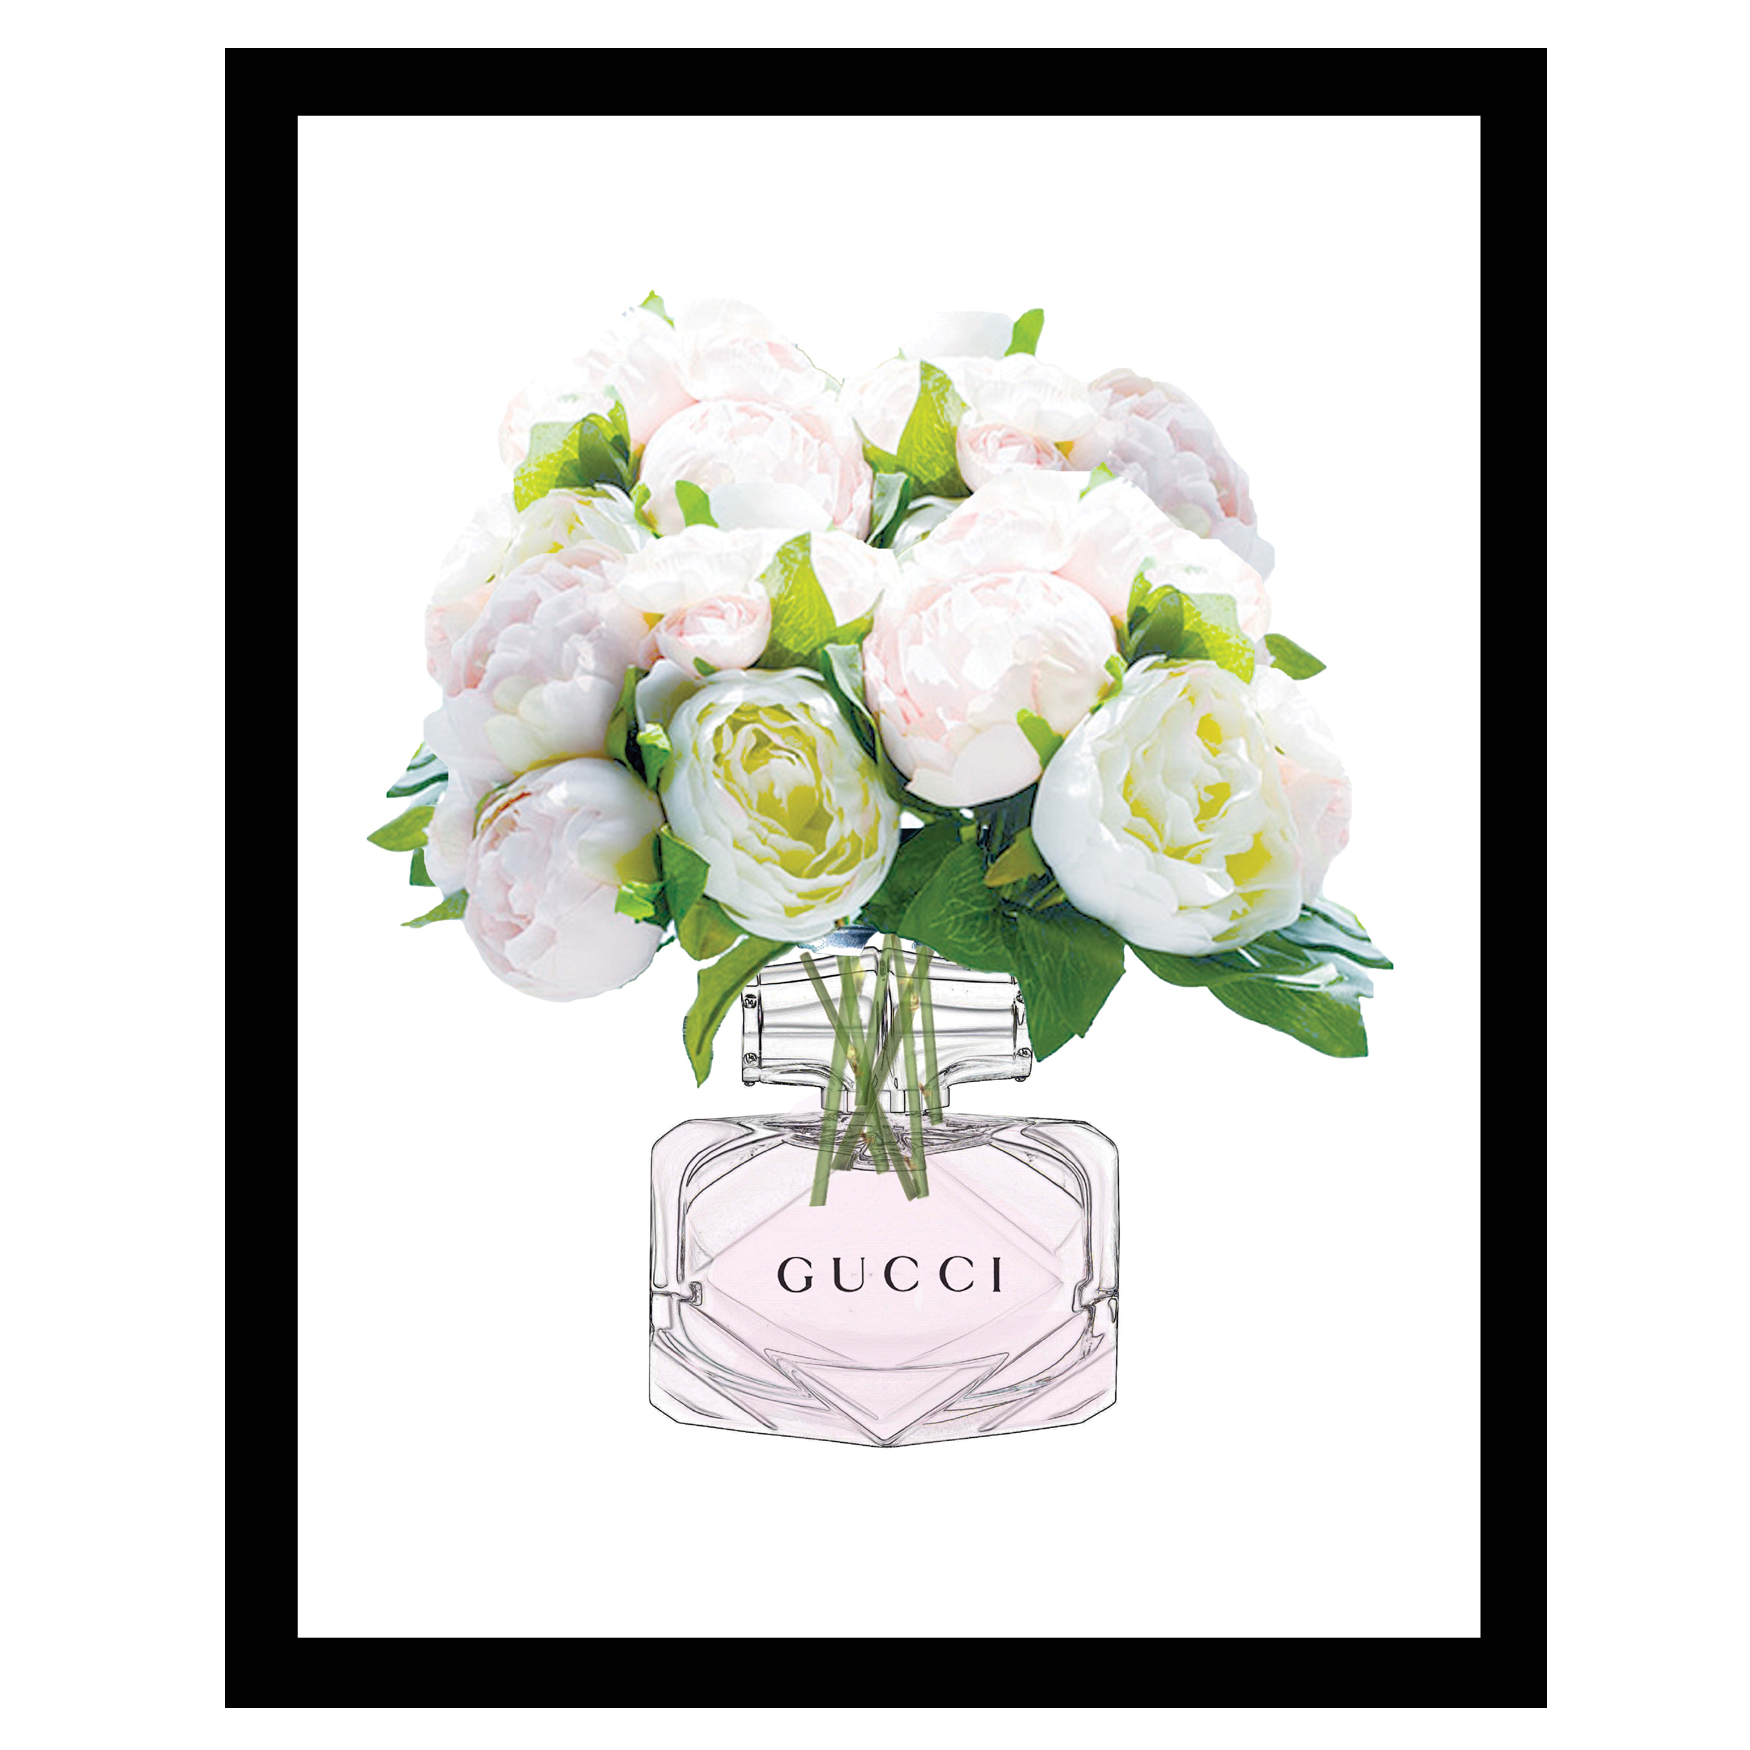 Gucci Perfume Bouquet - White / Green - 14x18 Framed Print, WHITE GREEN